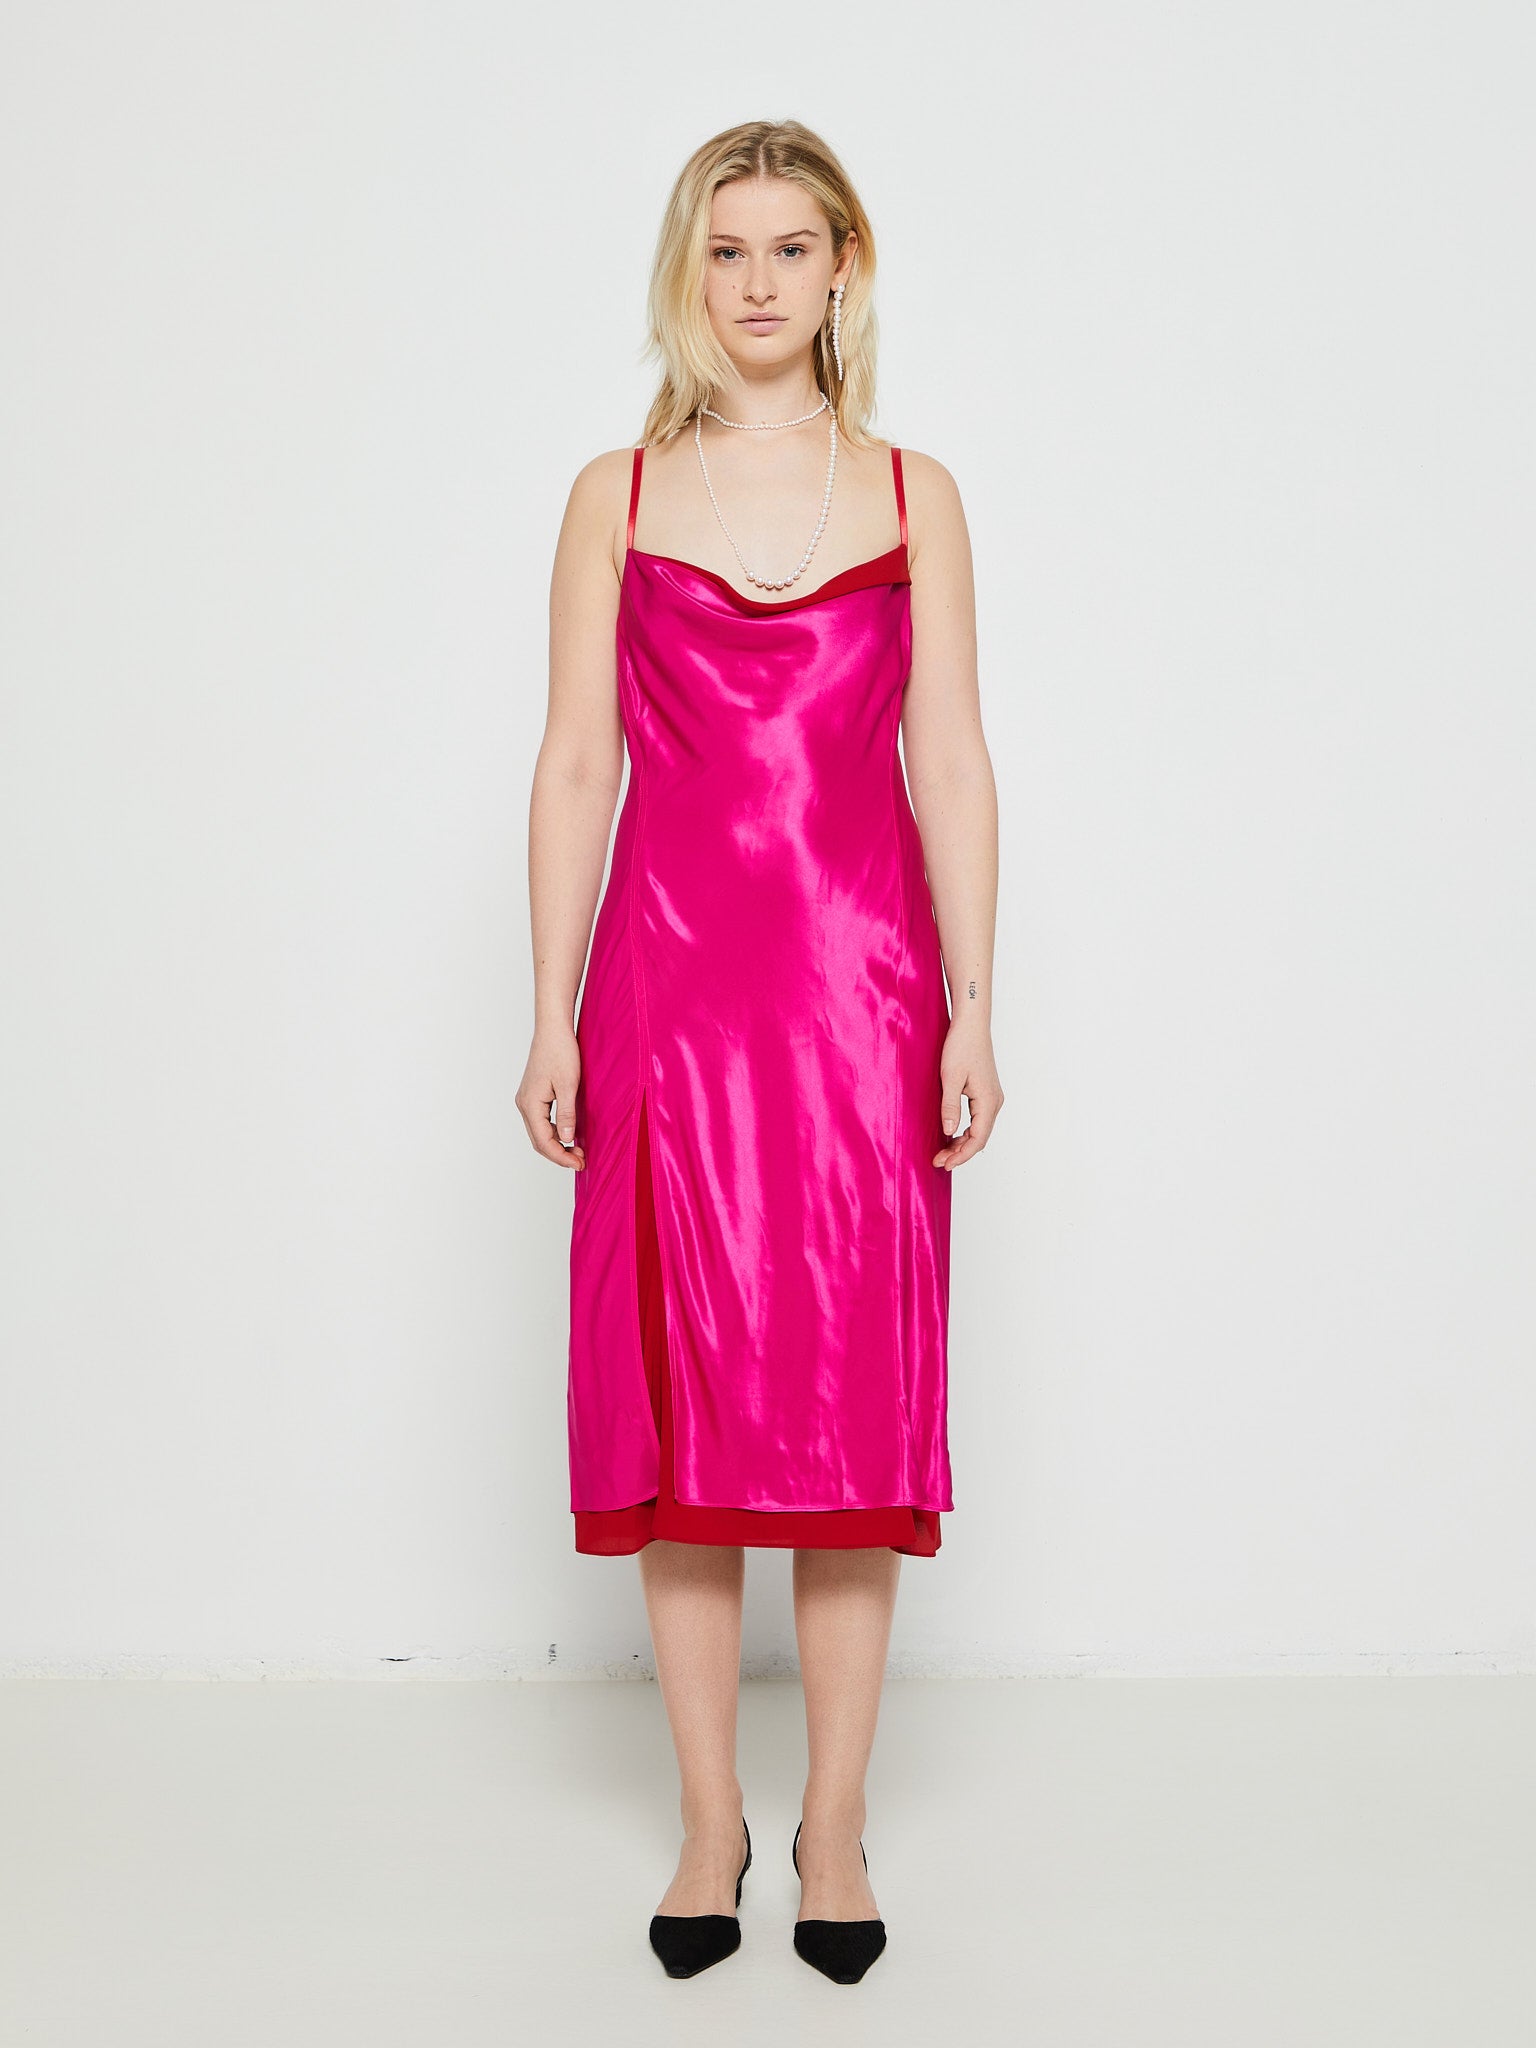 Acne Studios - Midi Dress in Fuchsia Pink